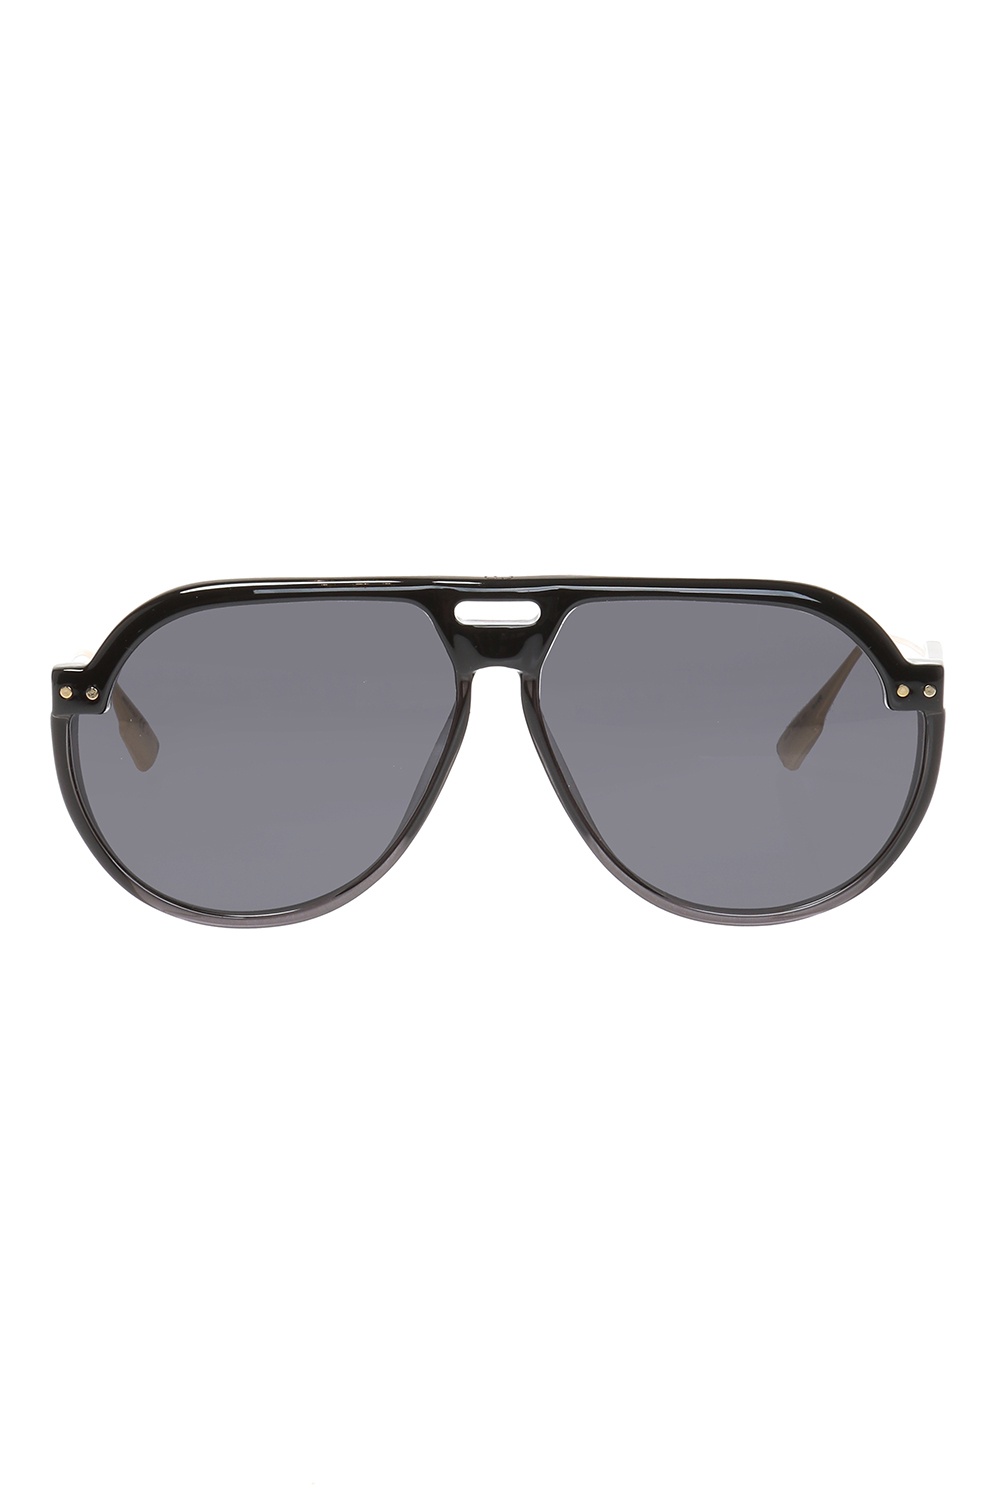 Club 3' sunglasses Dior - Vitkac Australia